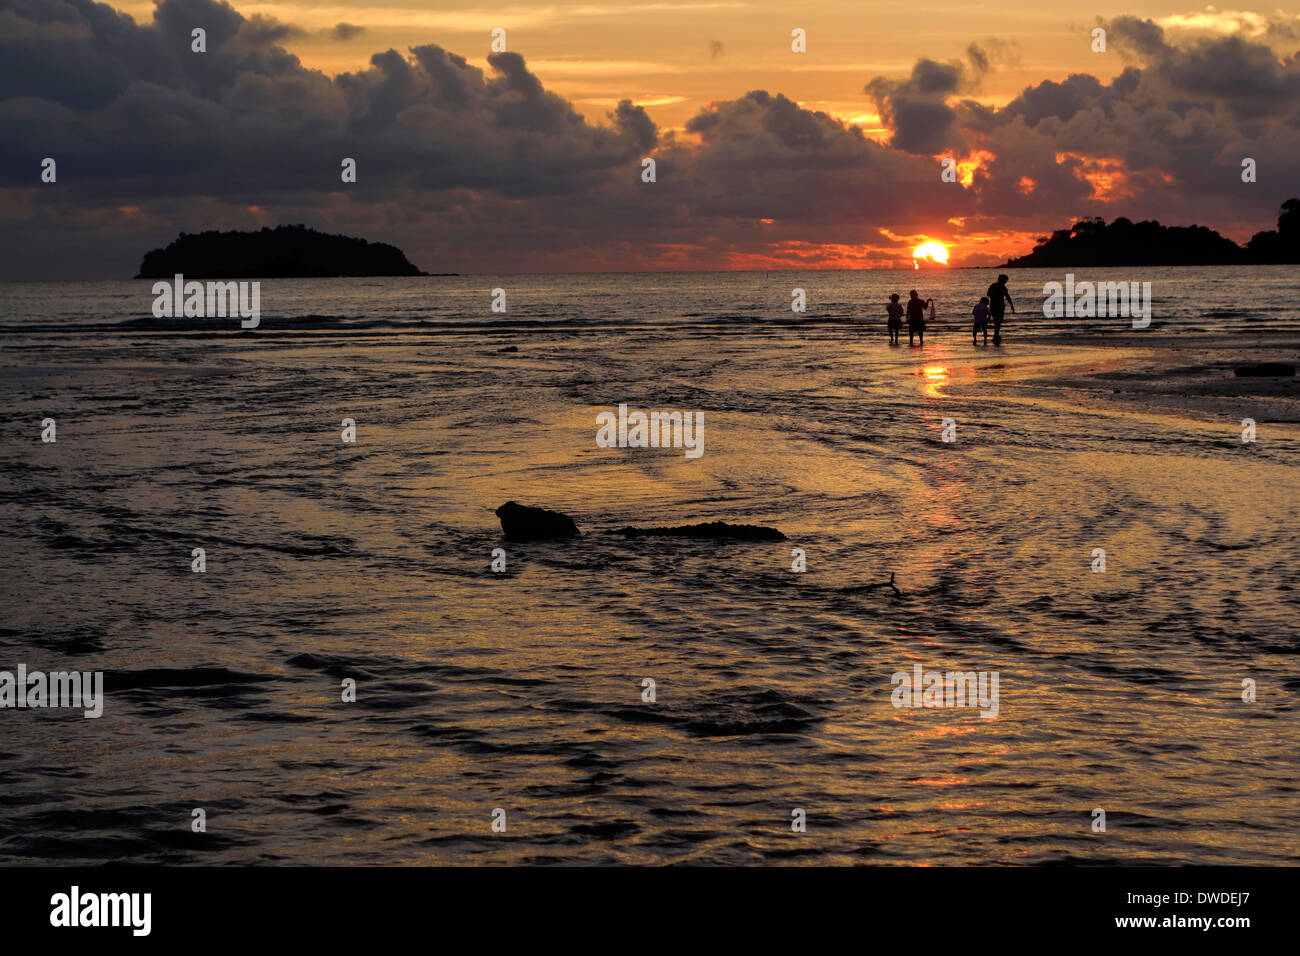 Family on Klong Prao Beach at sunset, Koh Chang Island, Thailand. Stock Photo